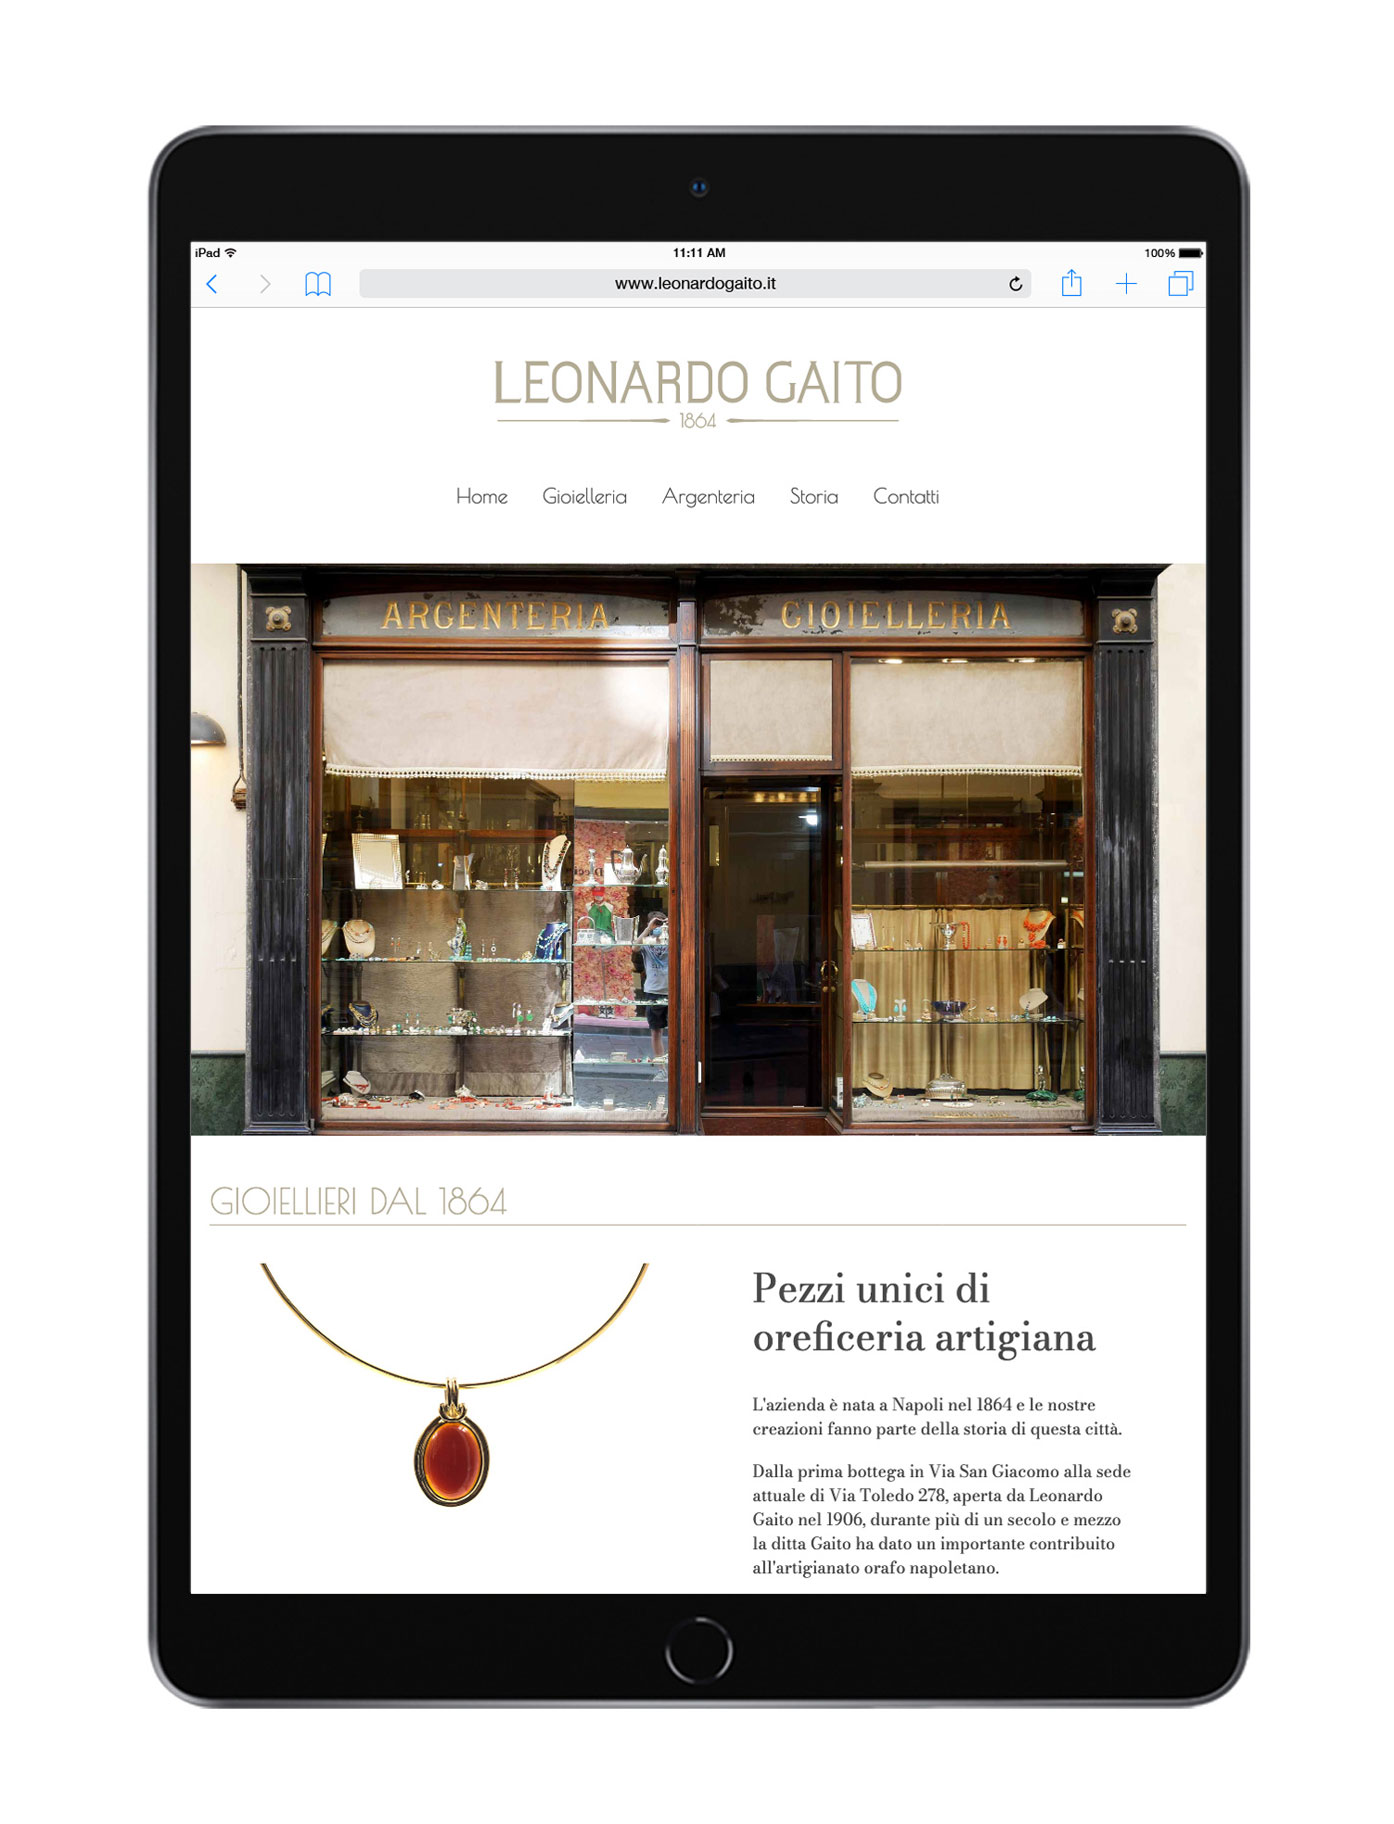 Website of Leonardo Gaito on an iPad